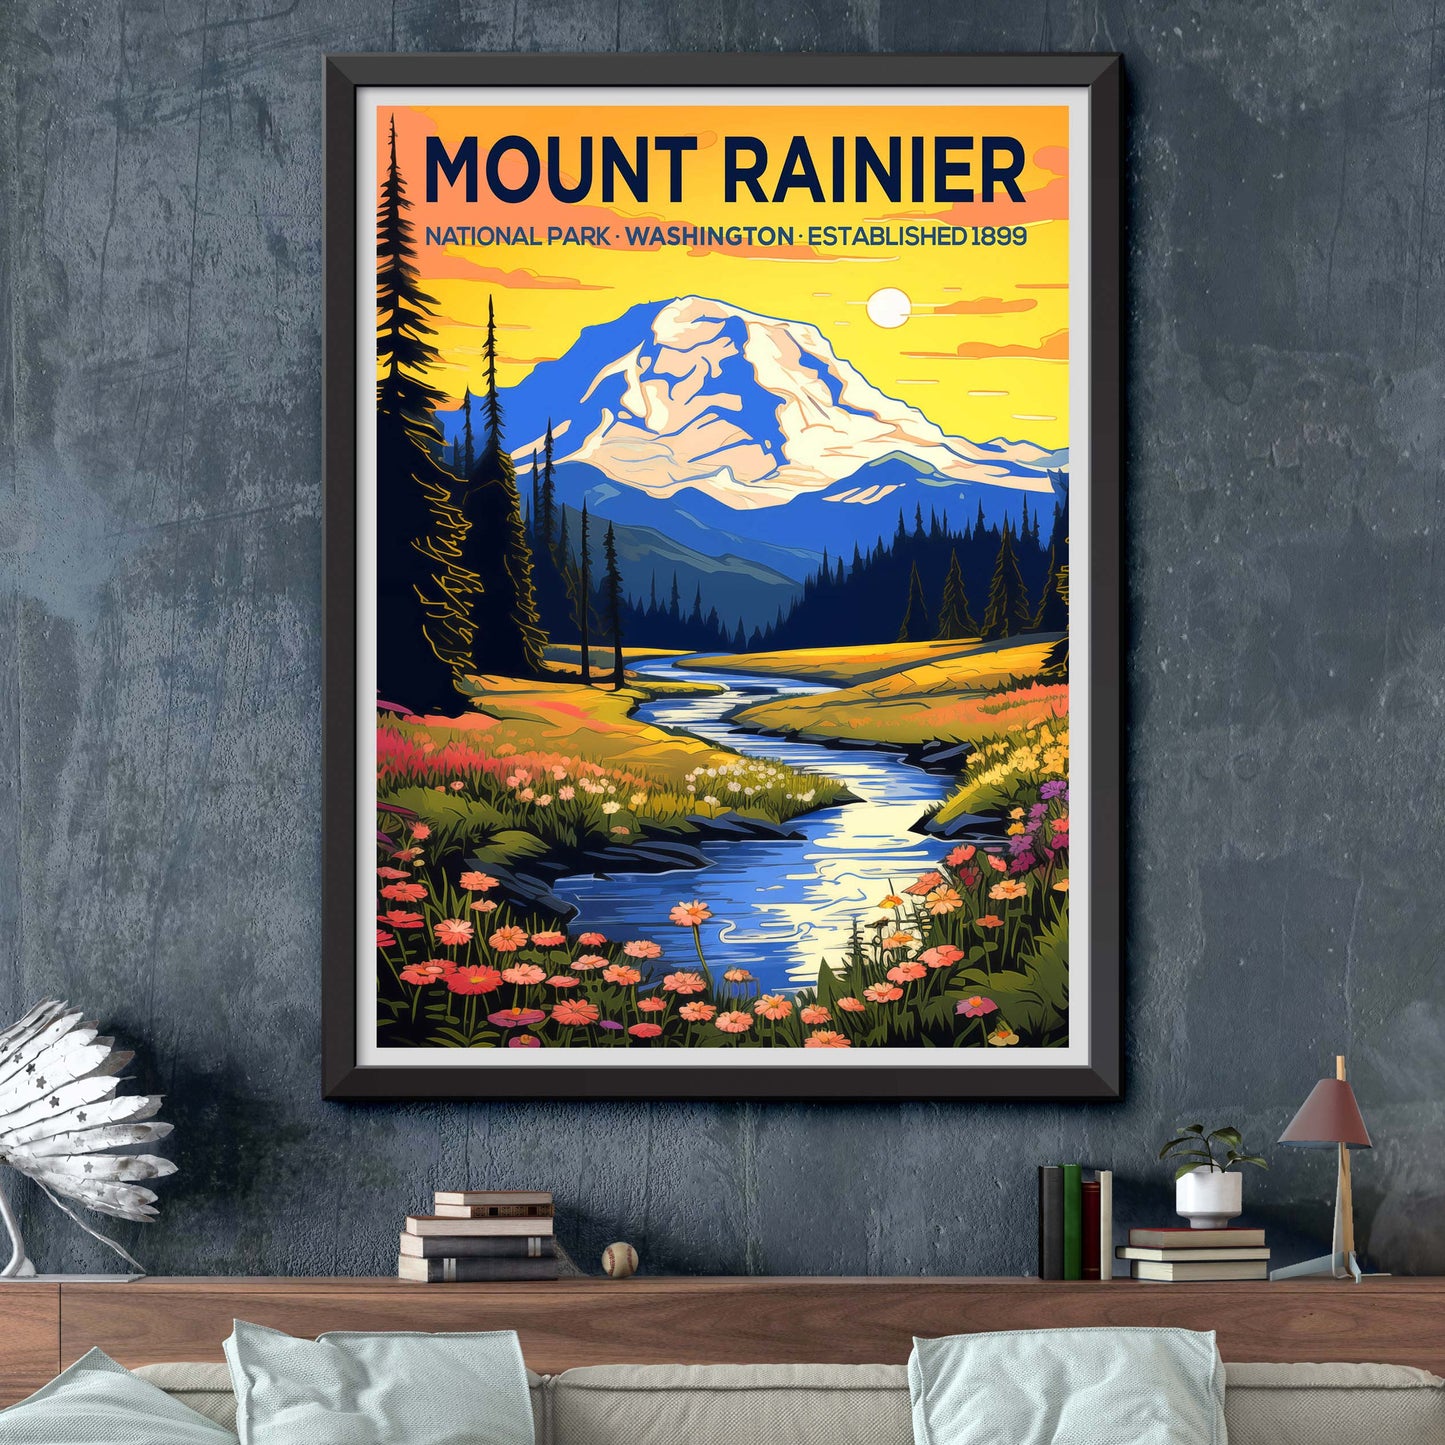 Mount Rainier Poster, Washington Wall Art, US National Park Poster